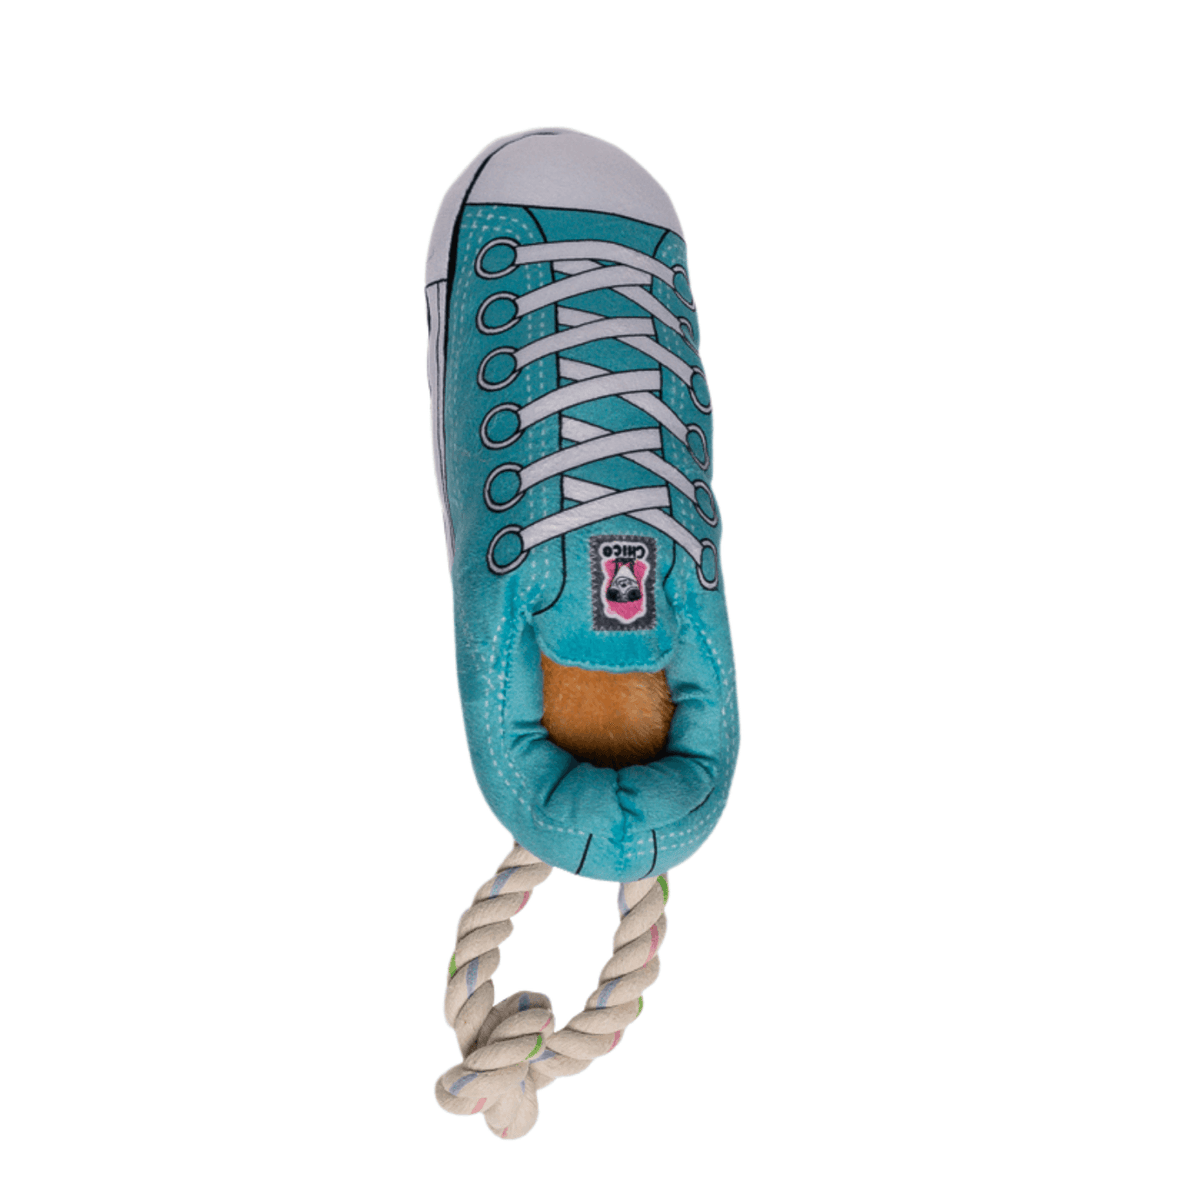 Squeaking Comfort Plush Sneaker Dog Toy - Blue FajarShuruqSA